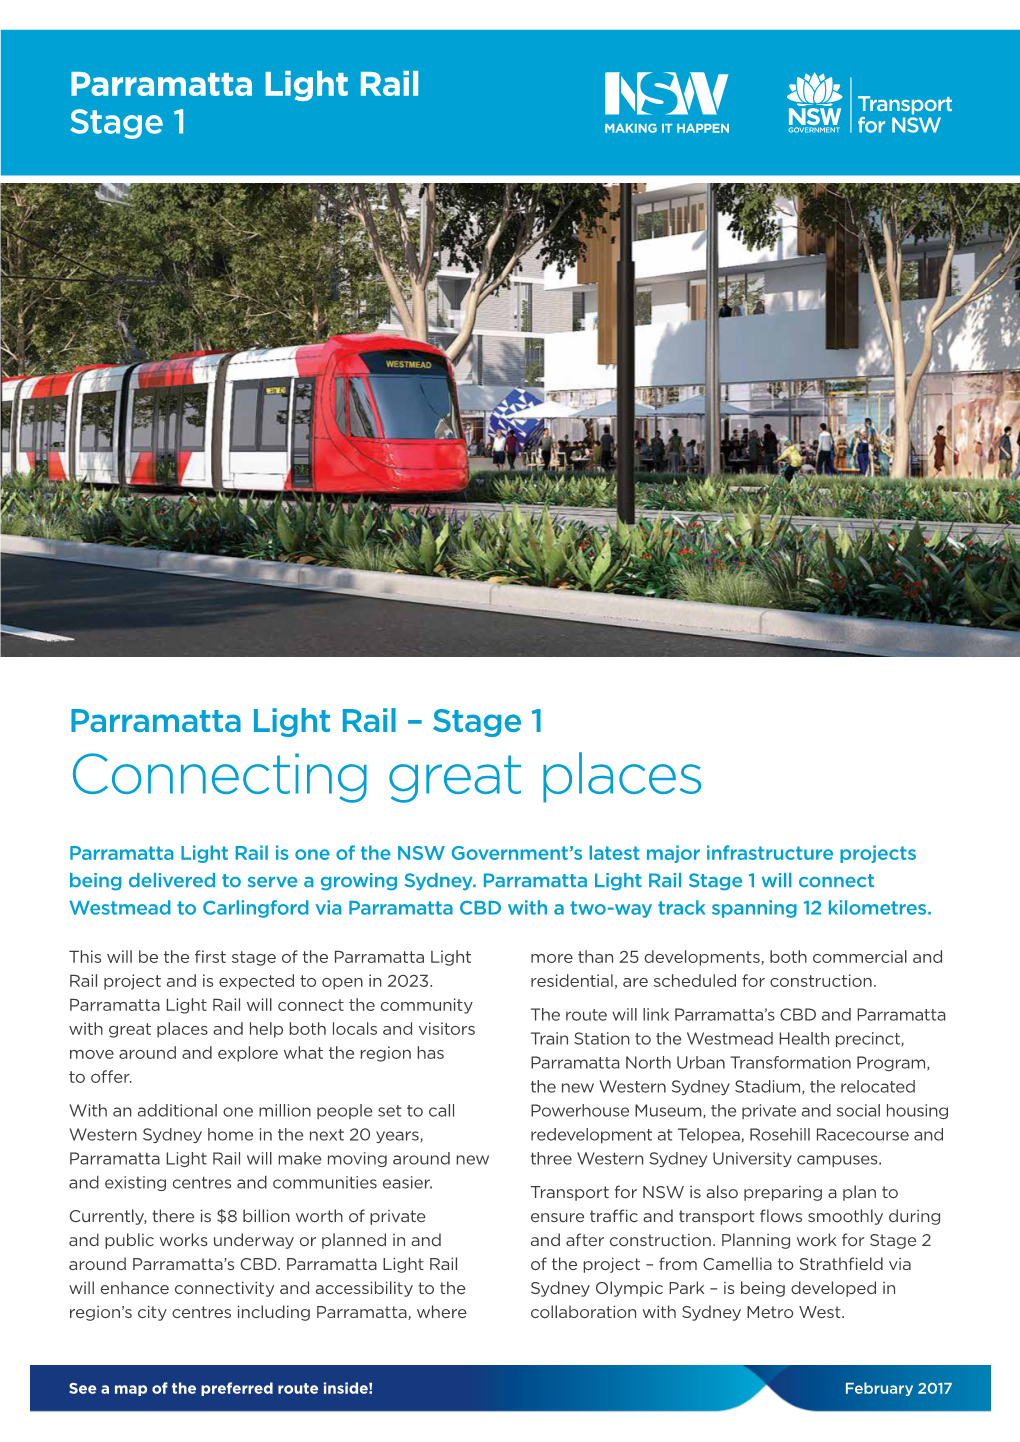 Parramatta Light Rail Stage 1 Brochure